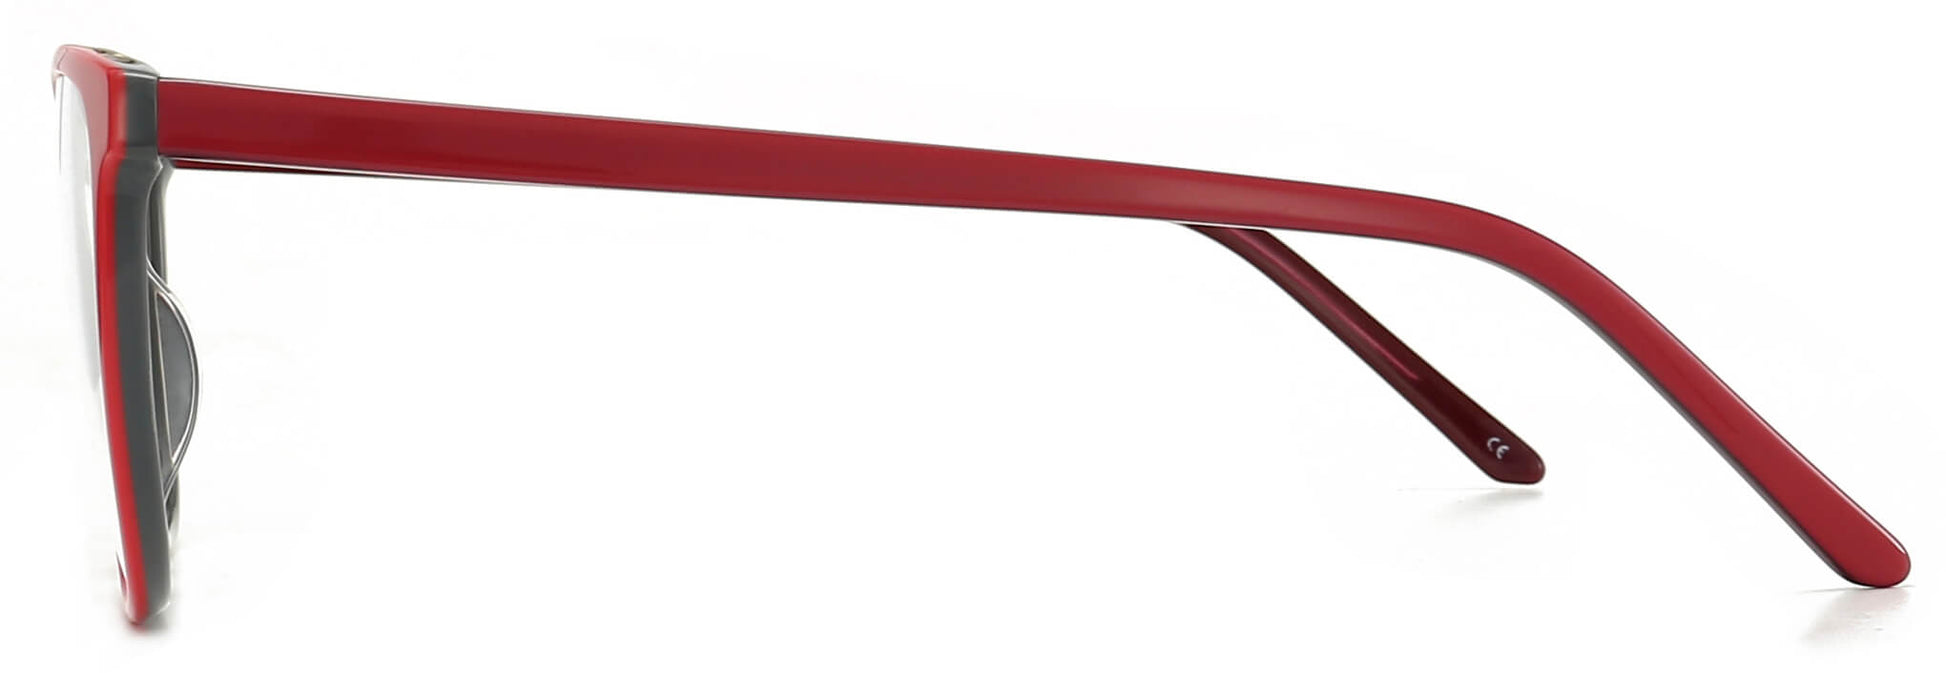 Tamura cateye red Eyeglasses from ANRRI, side view